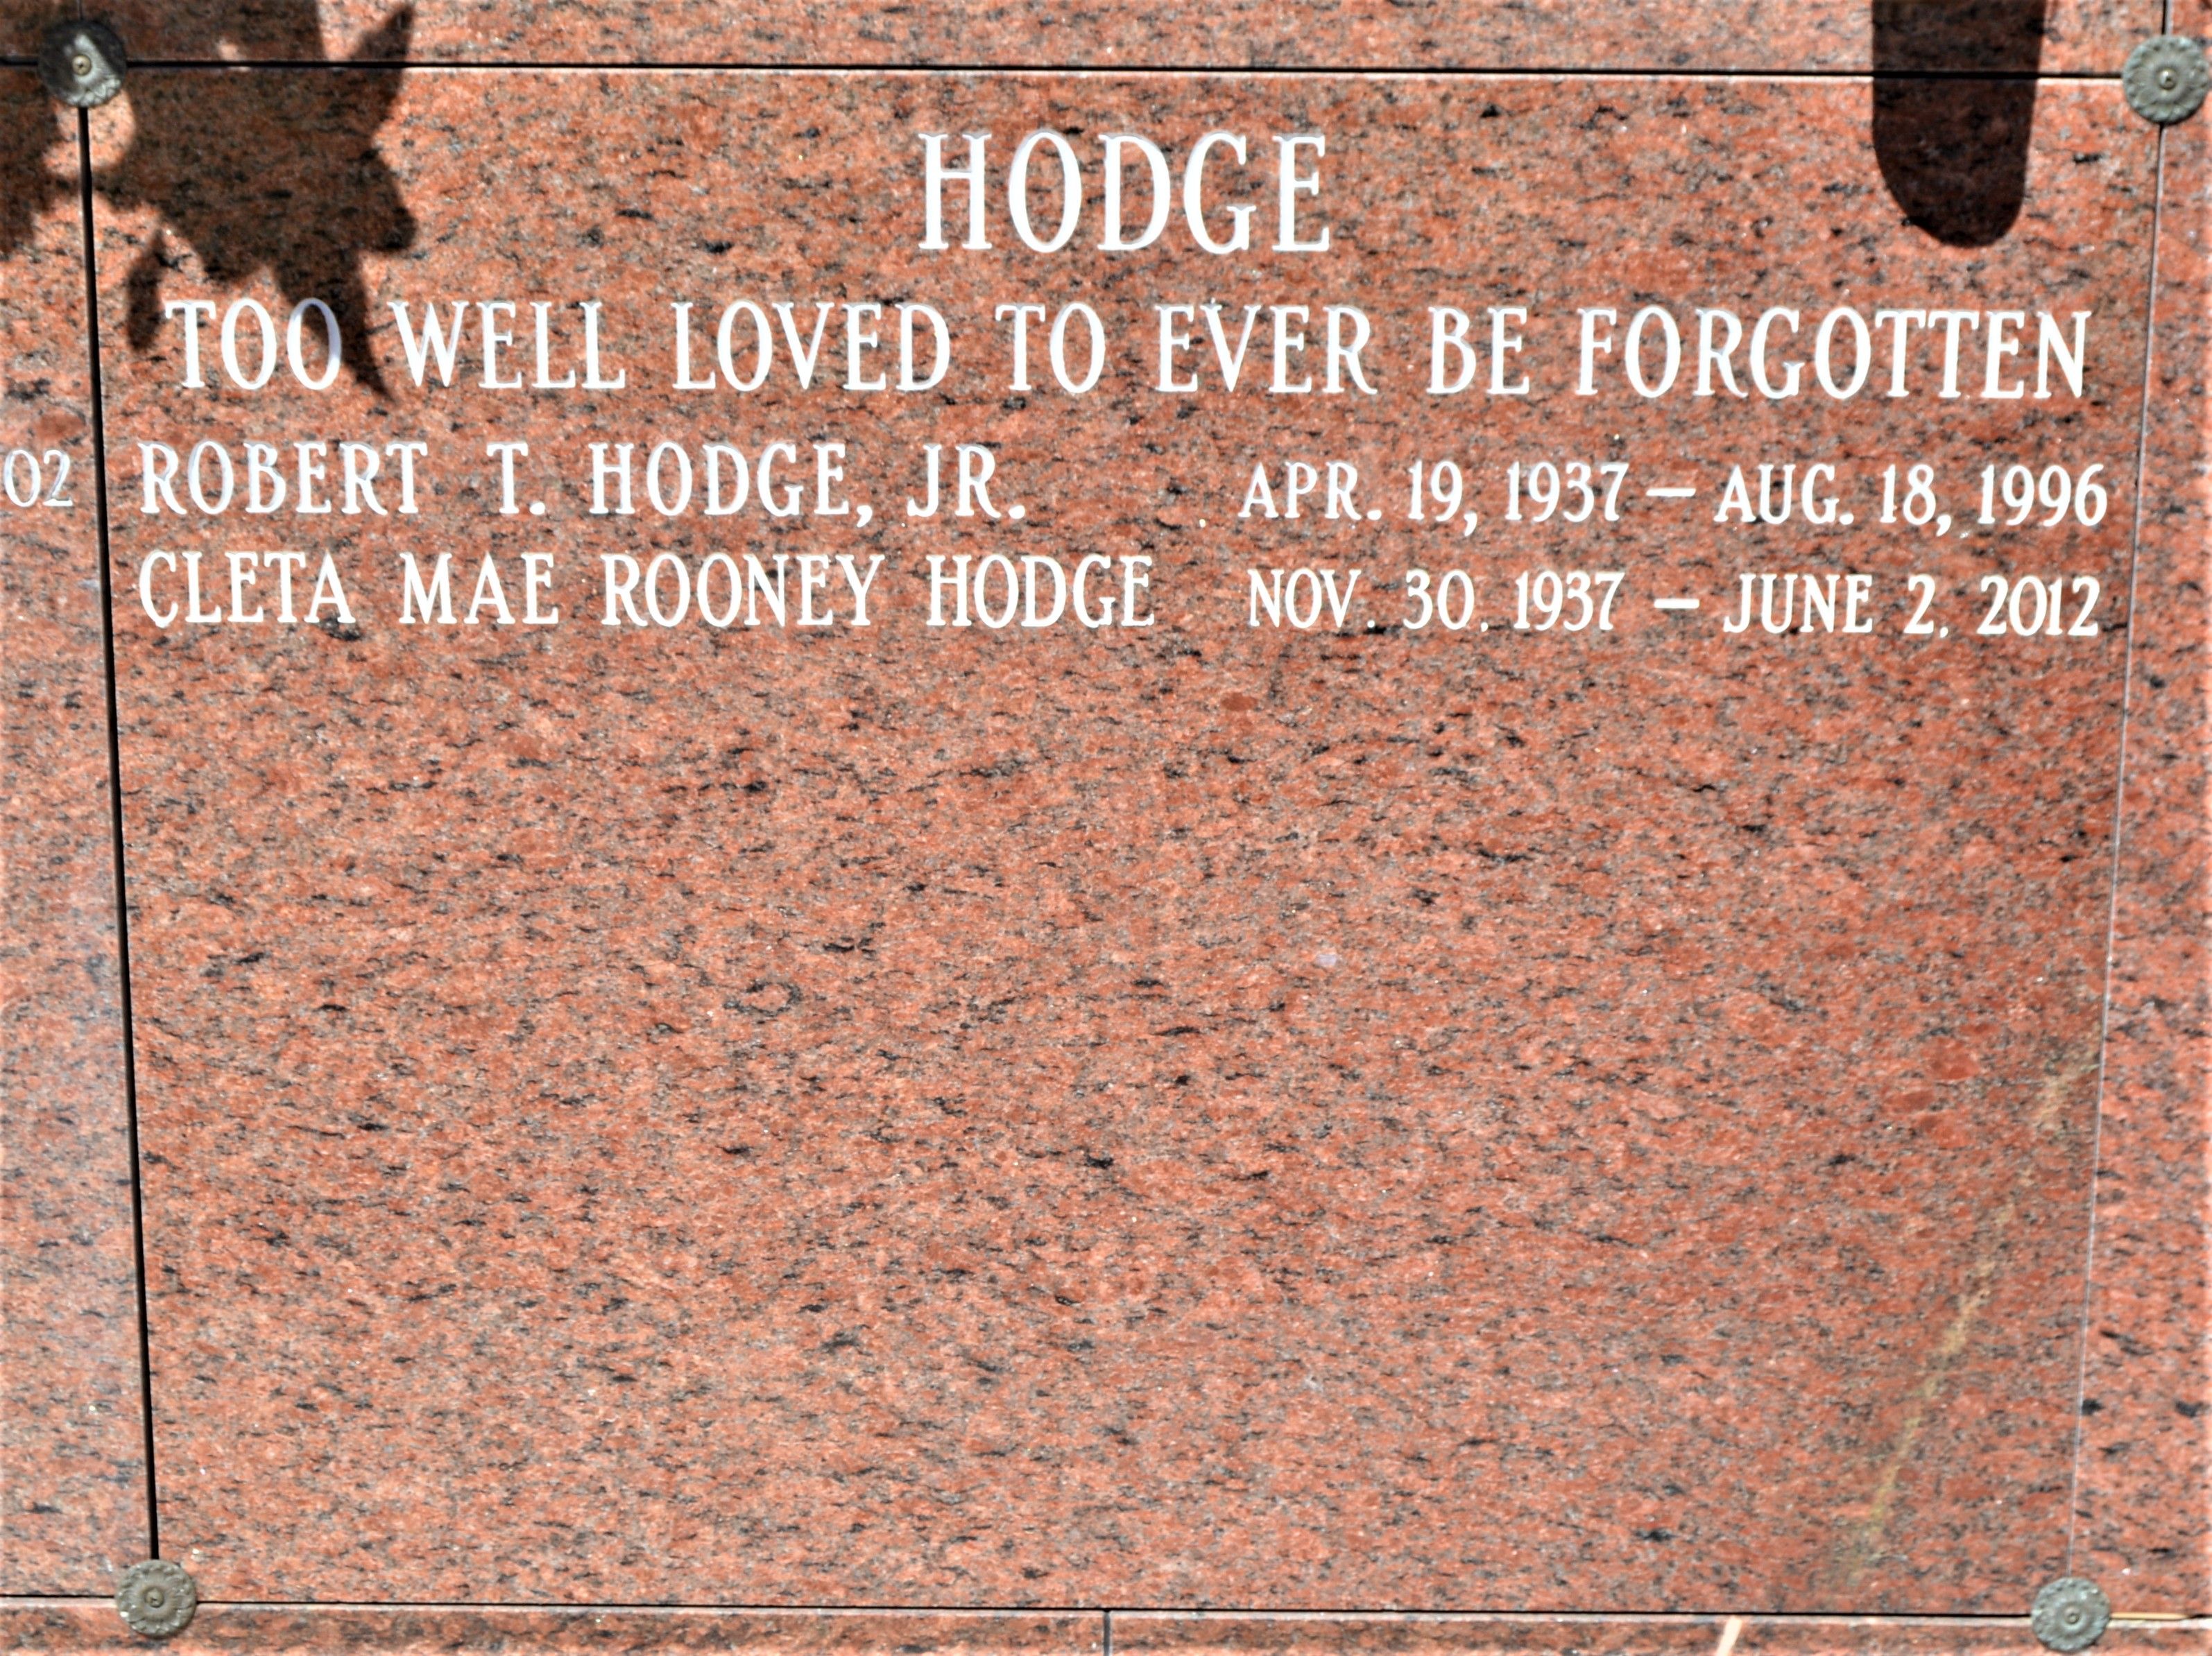 Cleta Mae Rooney Hodge (1937-2012)